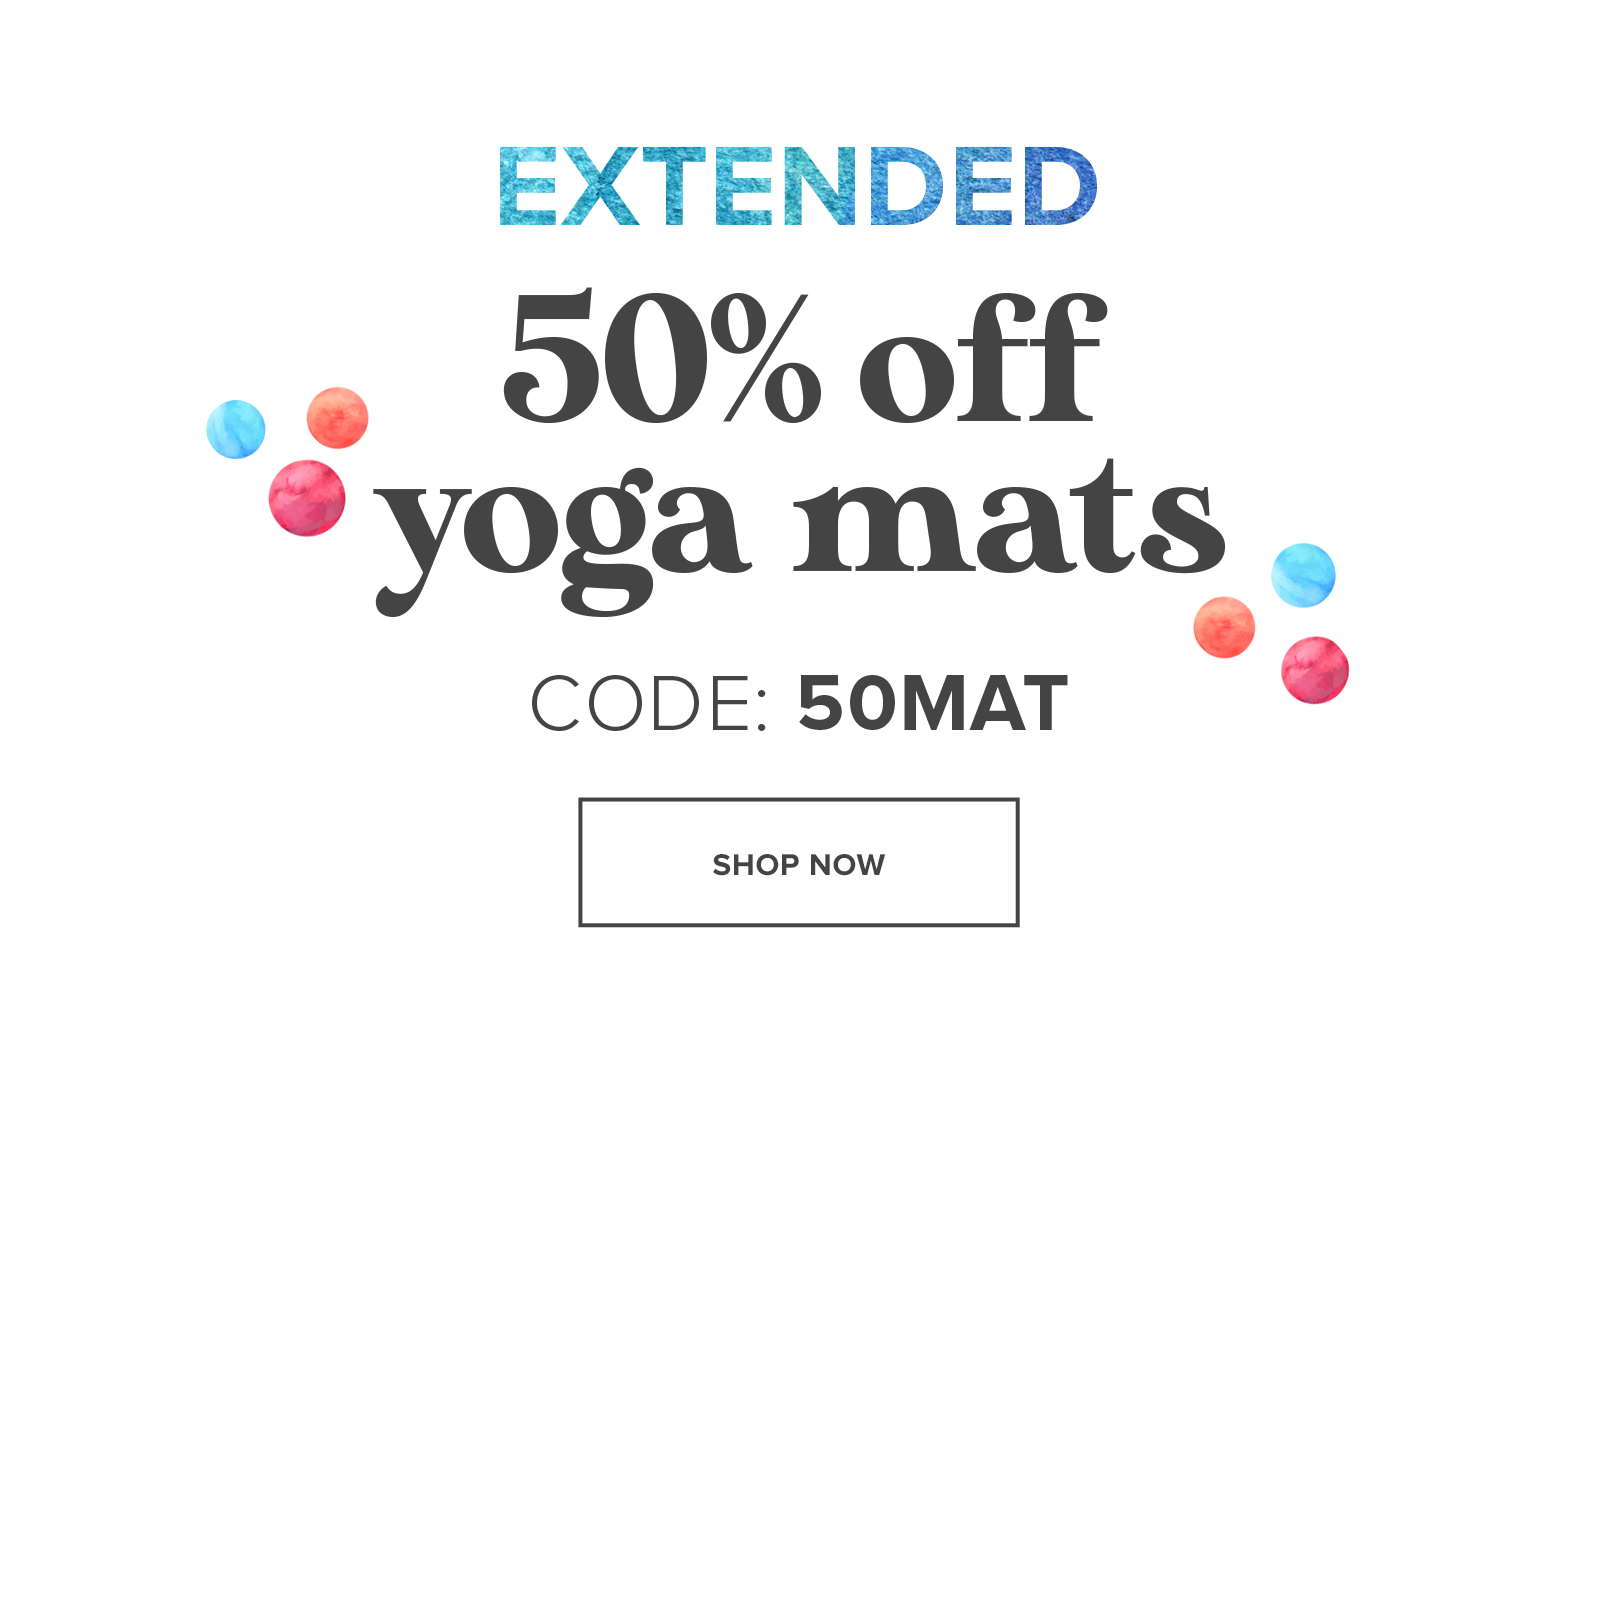 50% off yoga mats